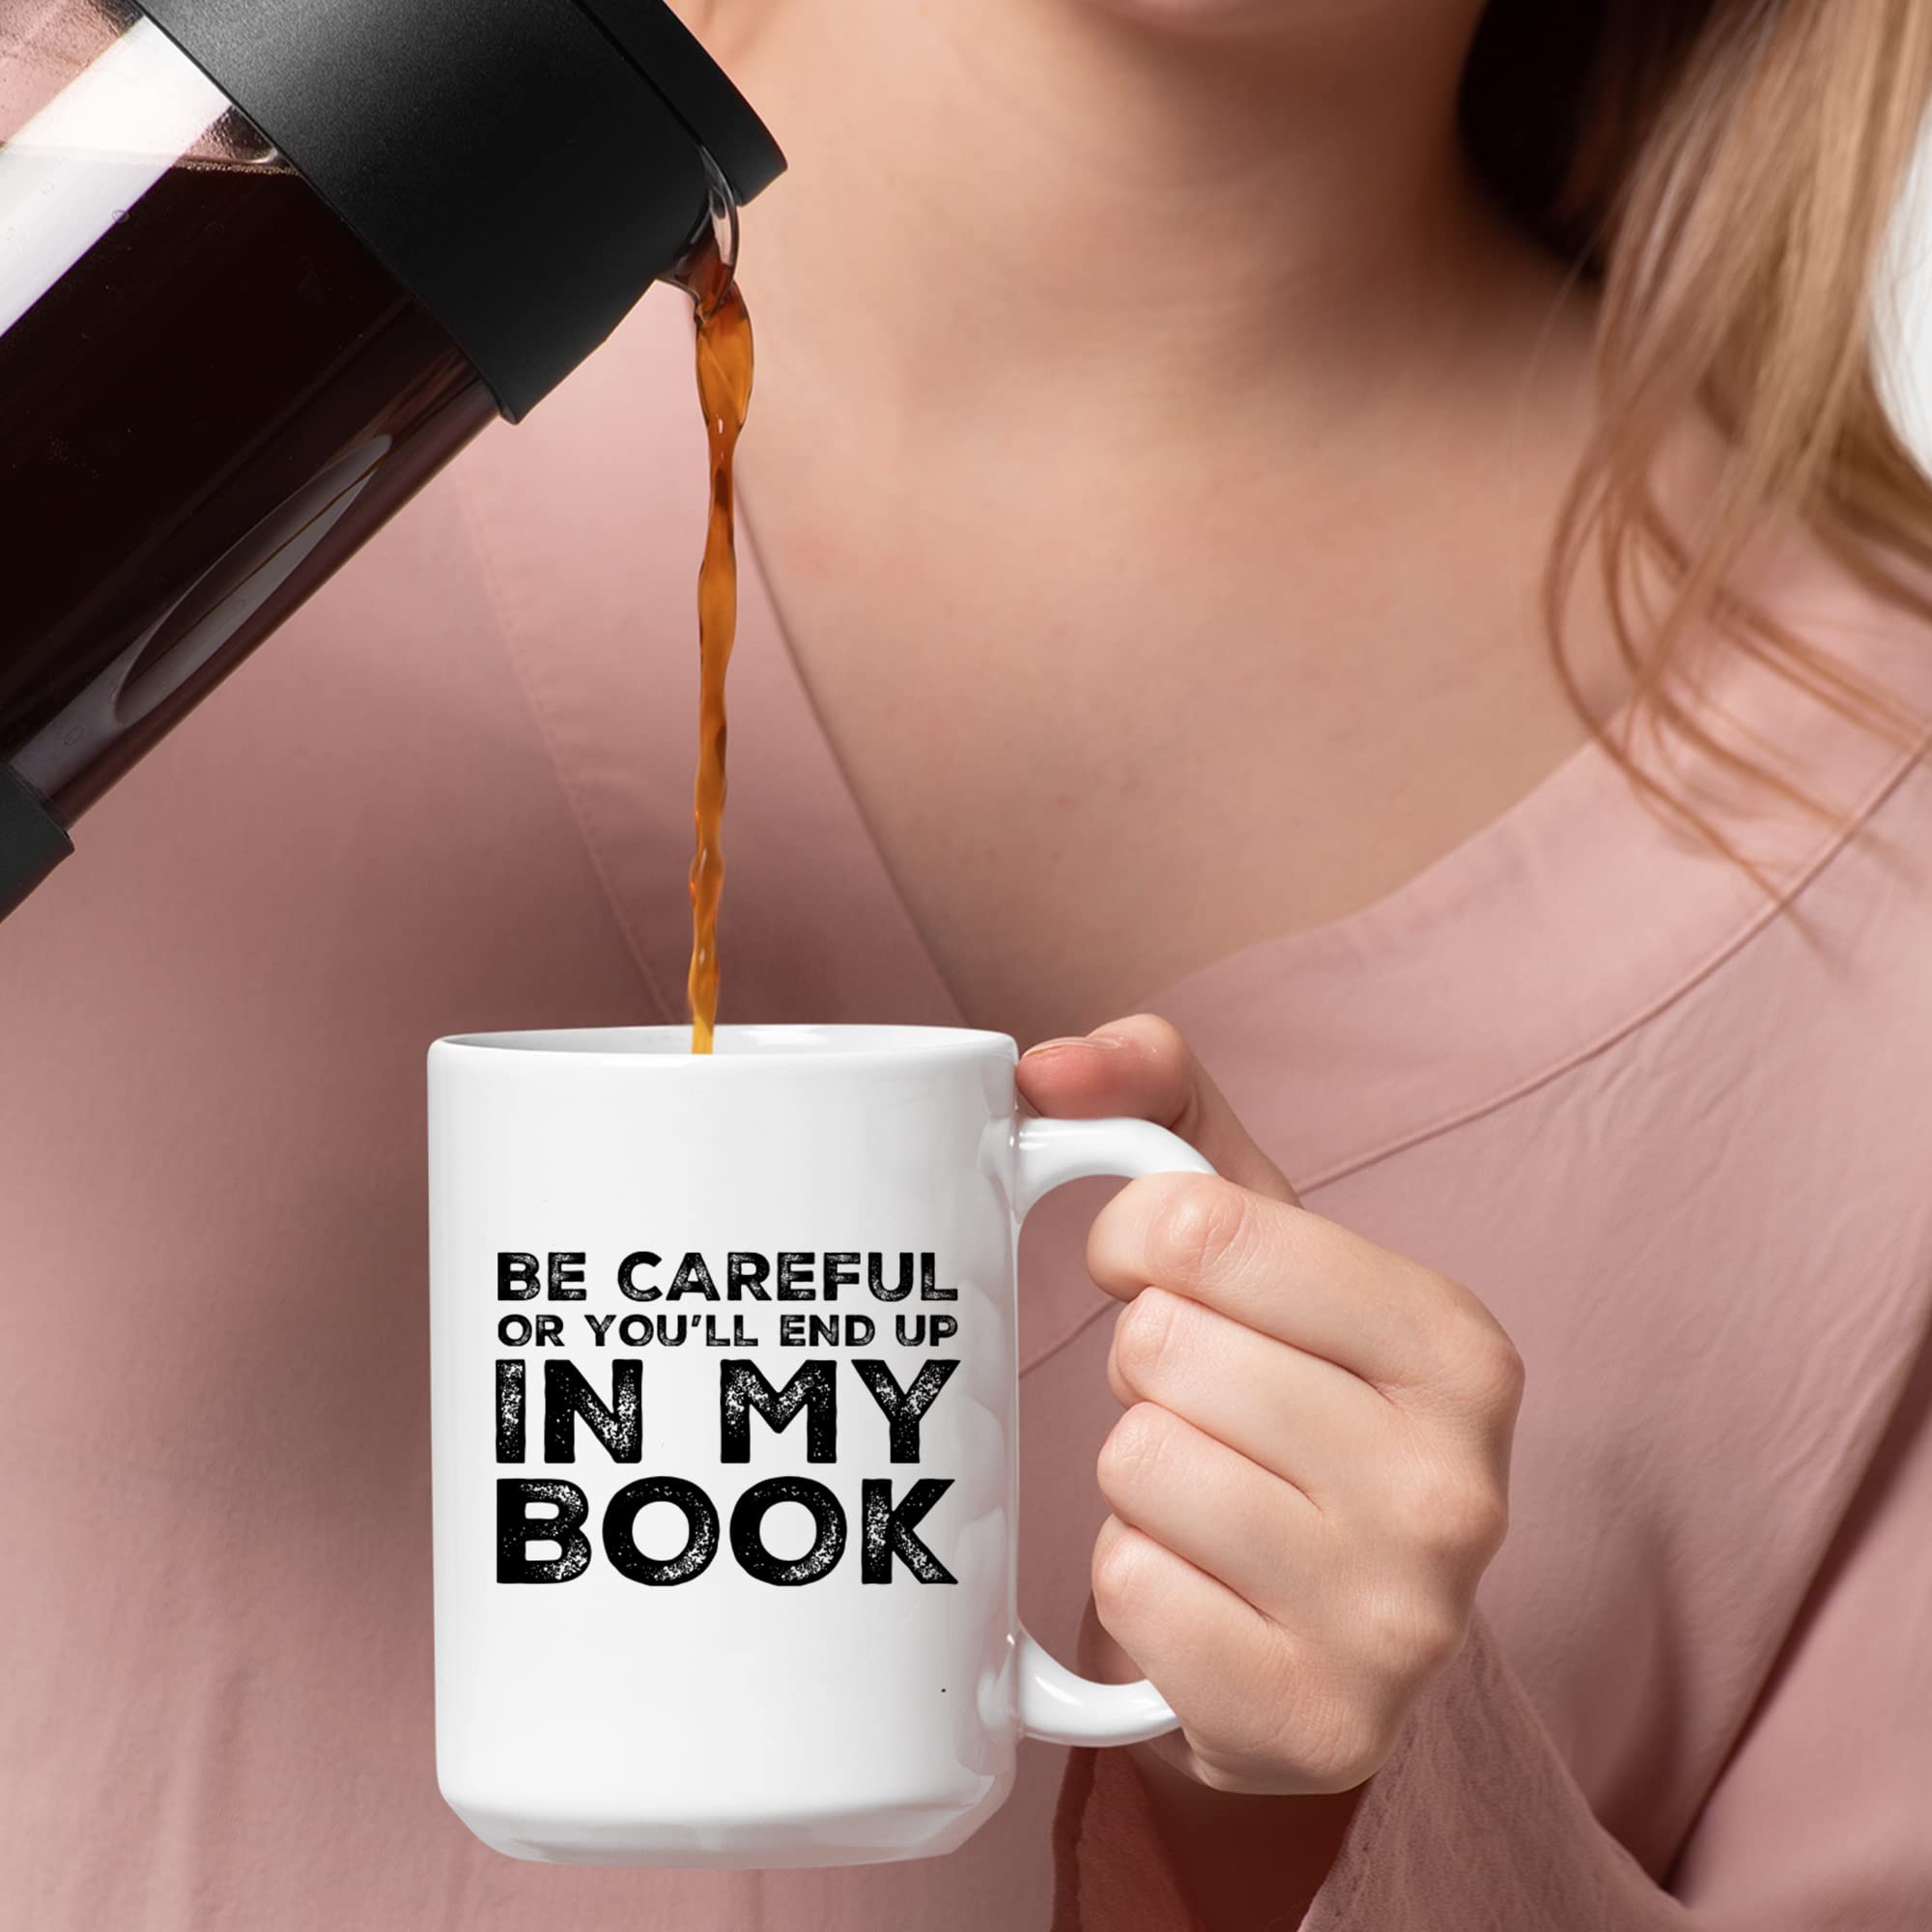 Panvola Be Careful Or You'll End Up In My Book Writer Author Novelist Writer Poet Ceramic Coffee Mug (15 oz)